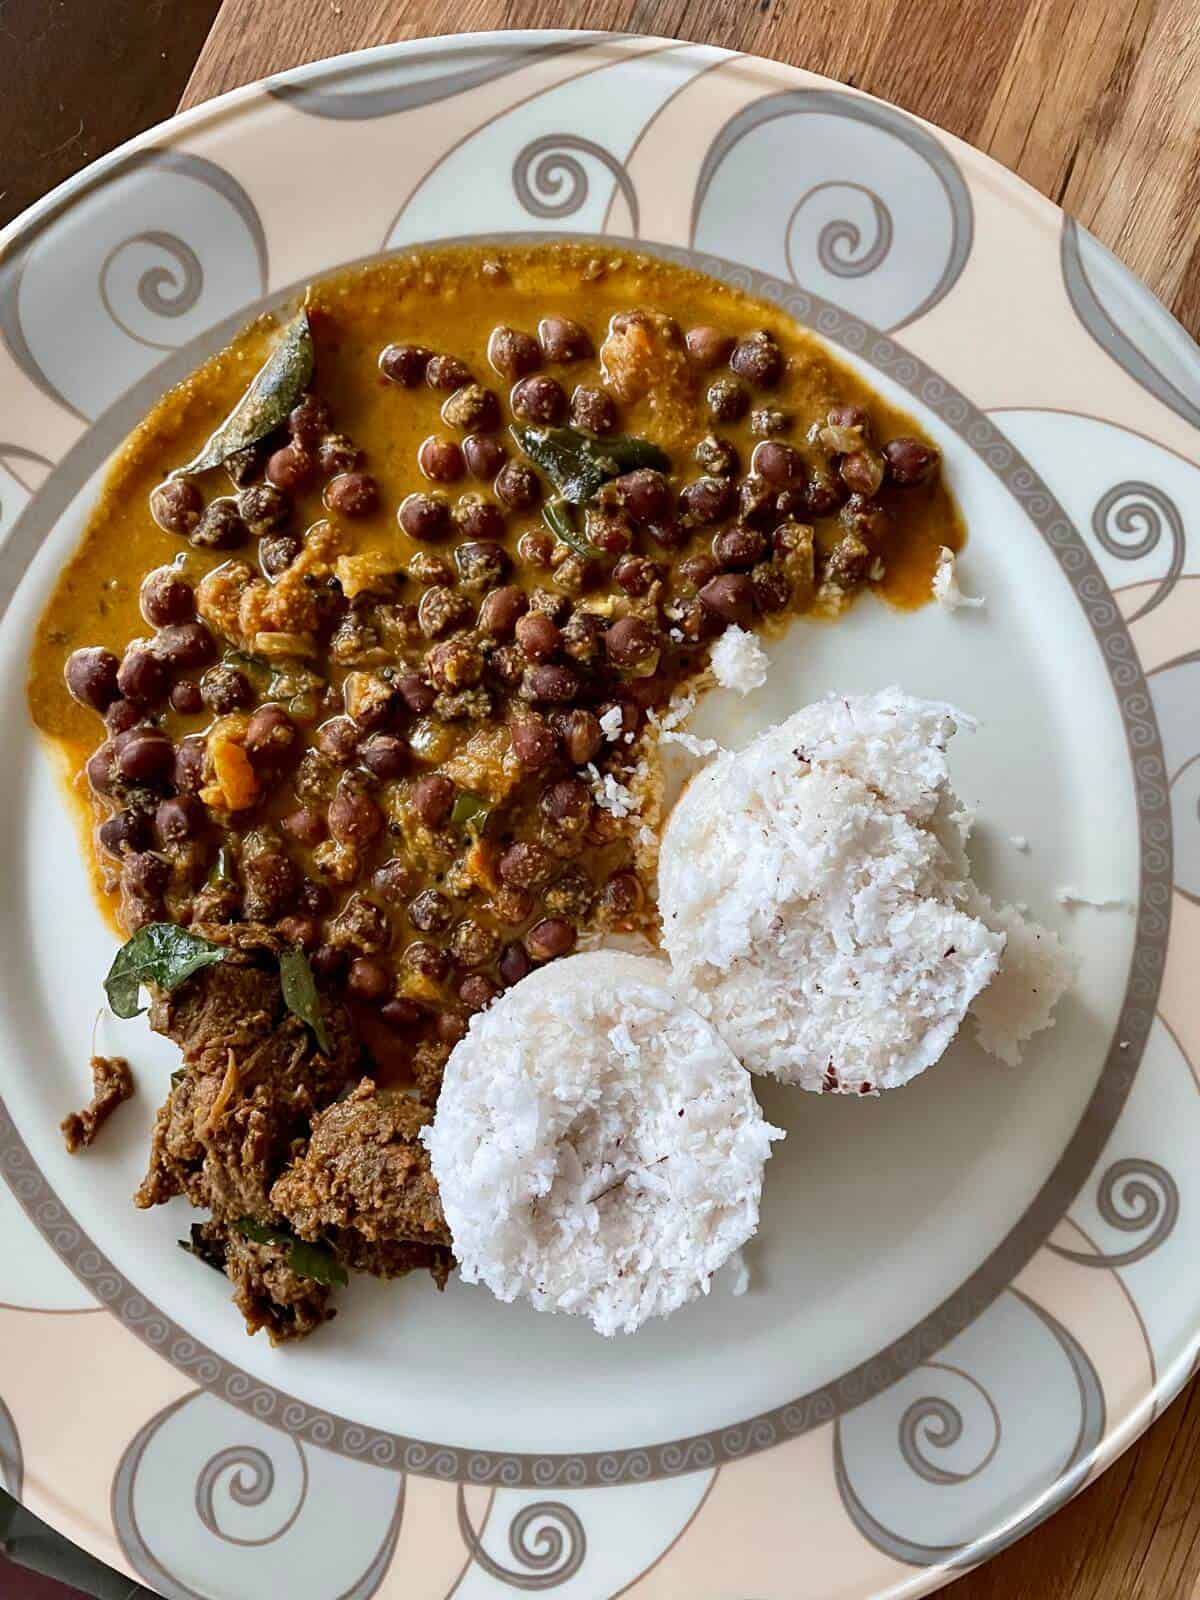 kadala curry with roasted coconut